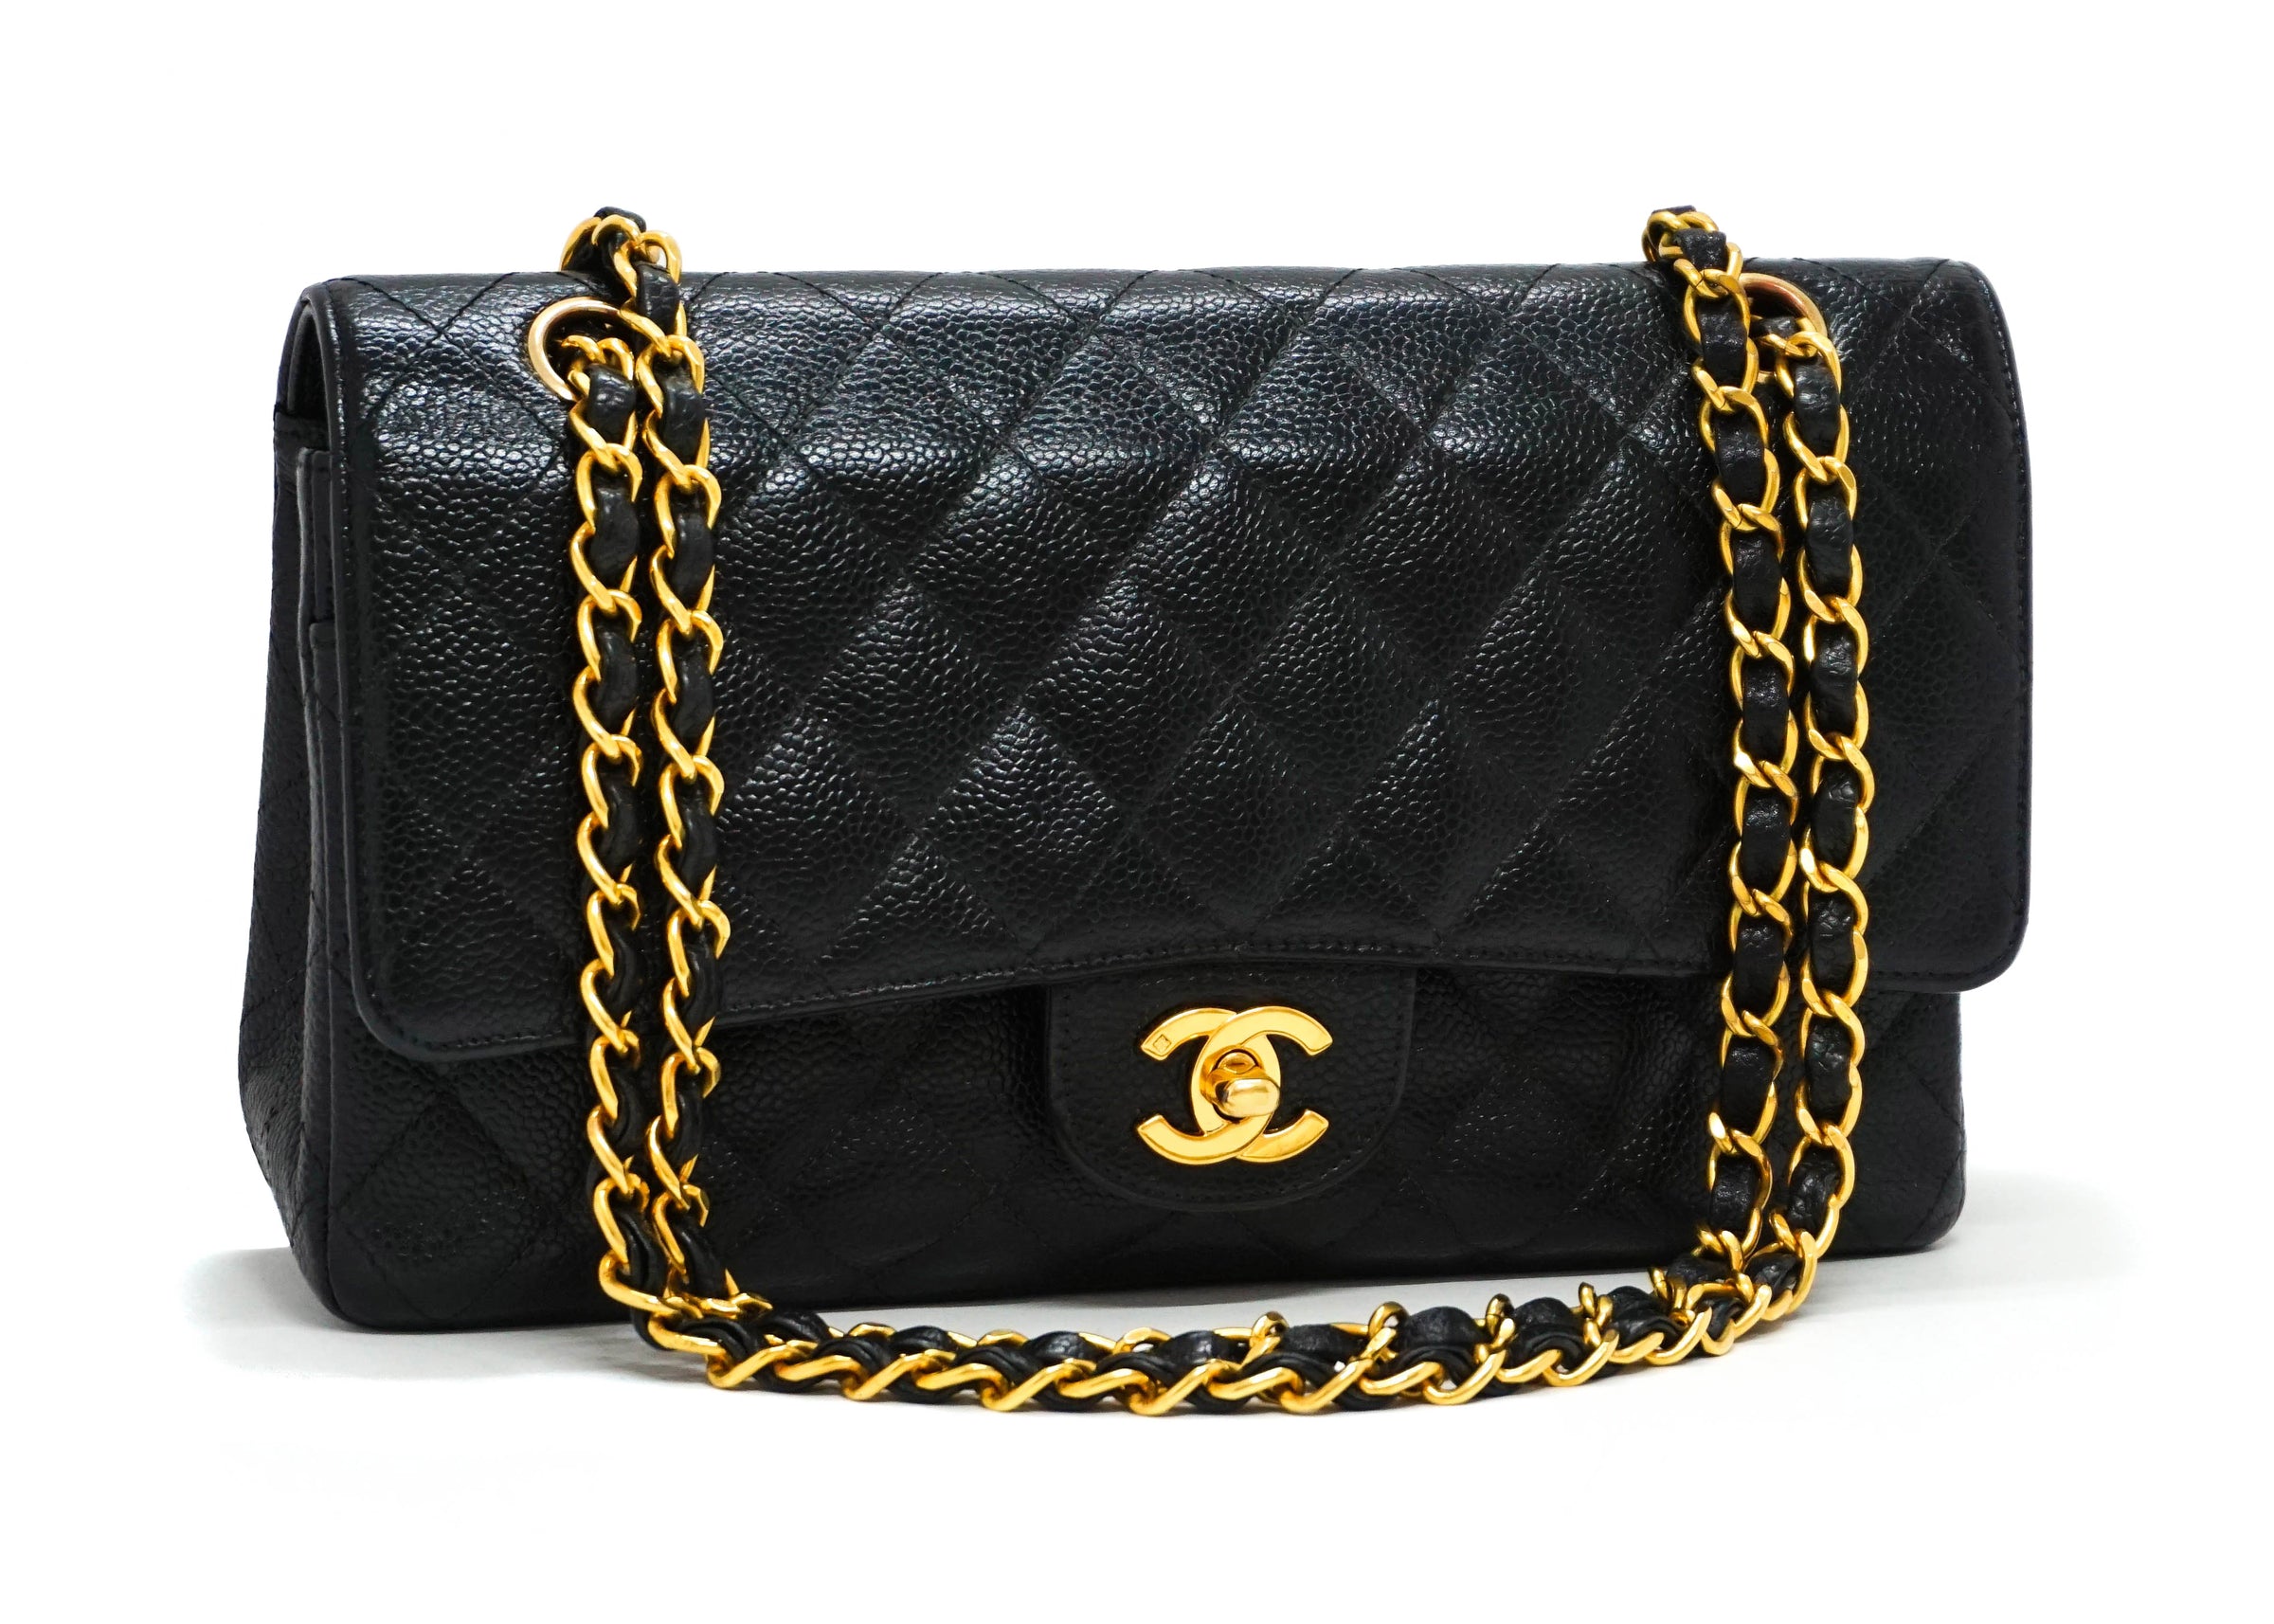 Classic Chanel Handbag Sizes